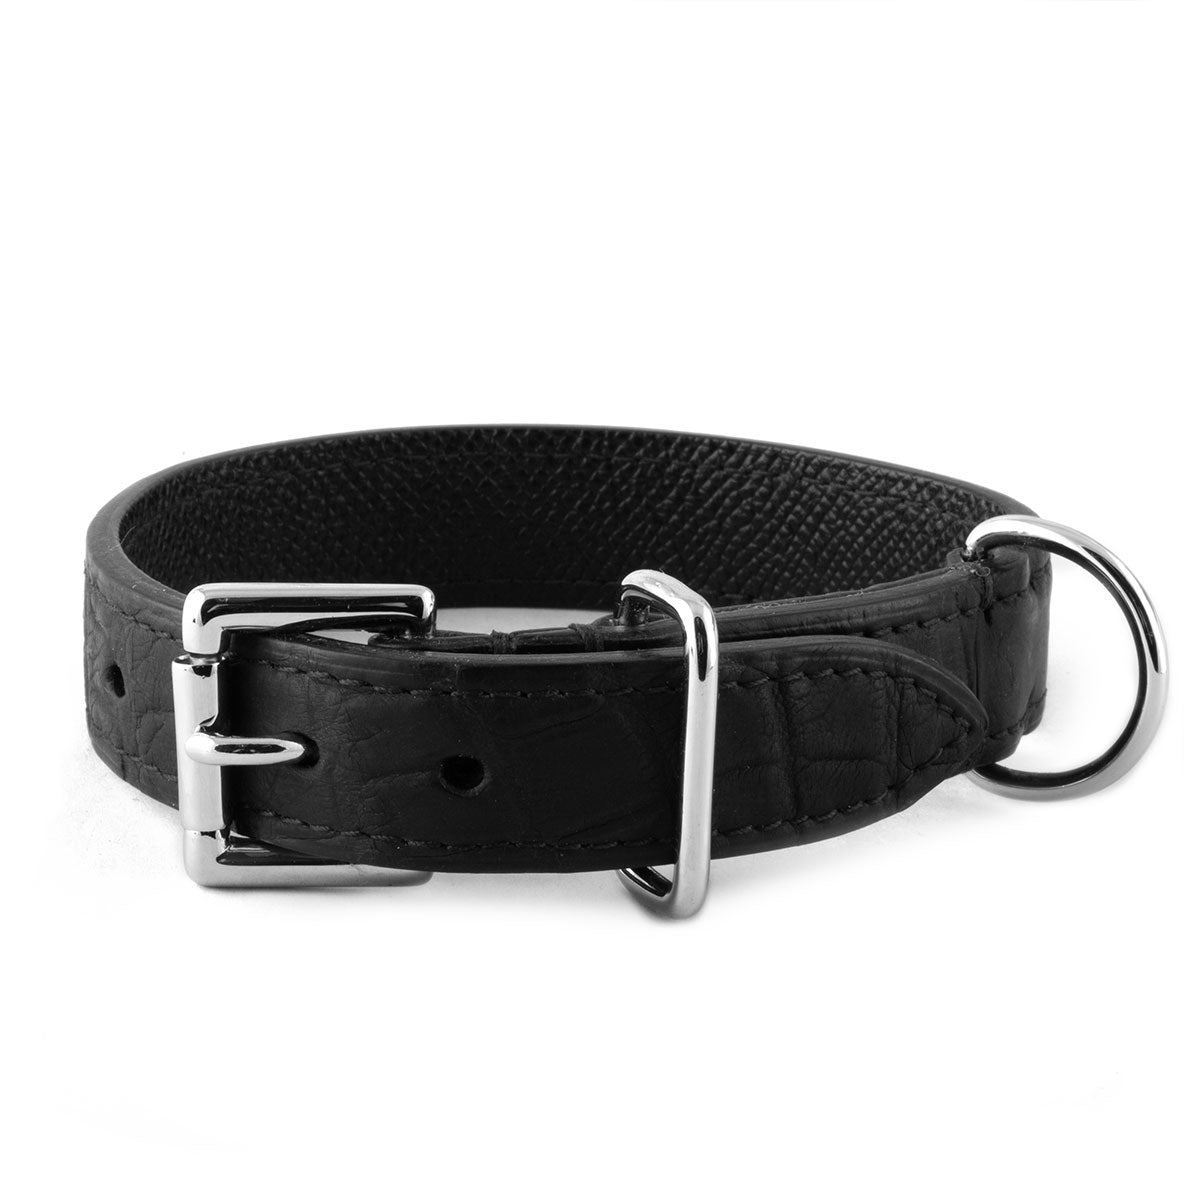 Collier cuir pour animal de compagnie (chien, chat...) - Alligator - watch band leather strap - ABP Concept -